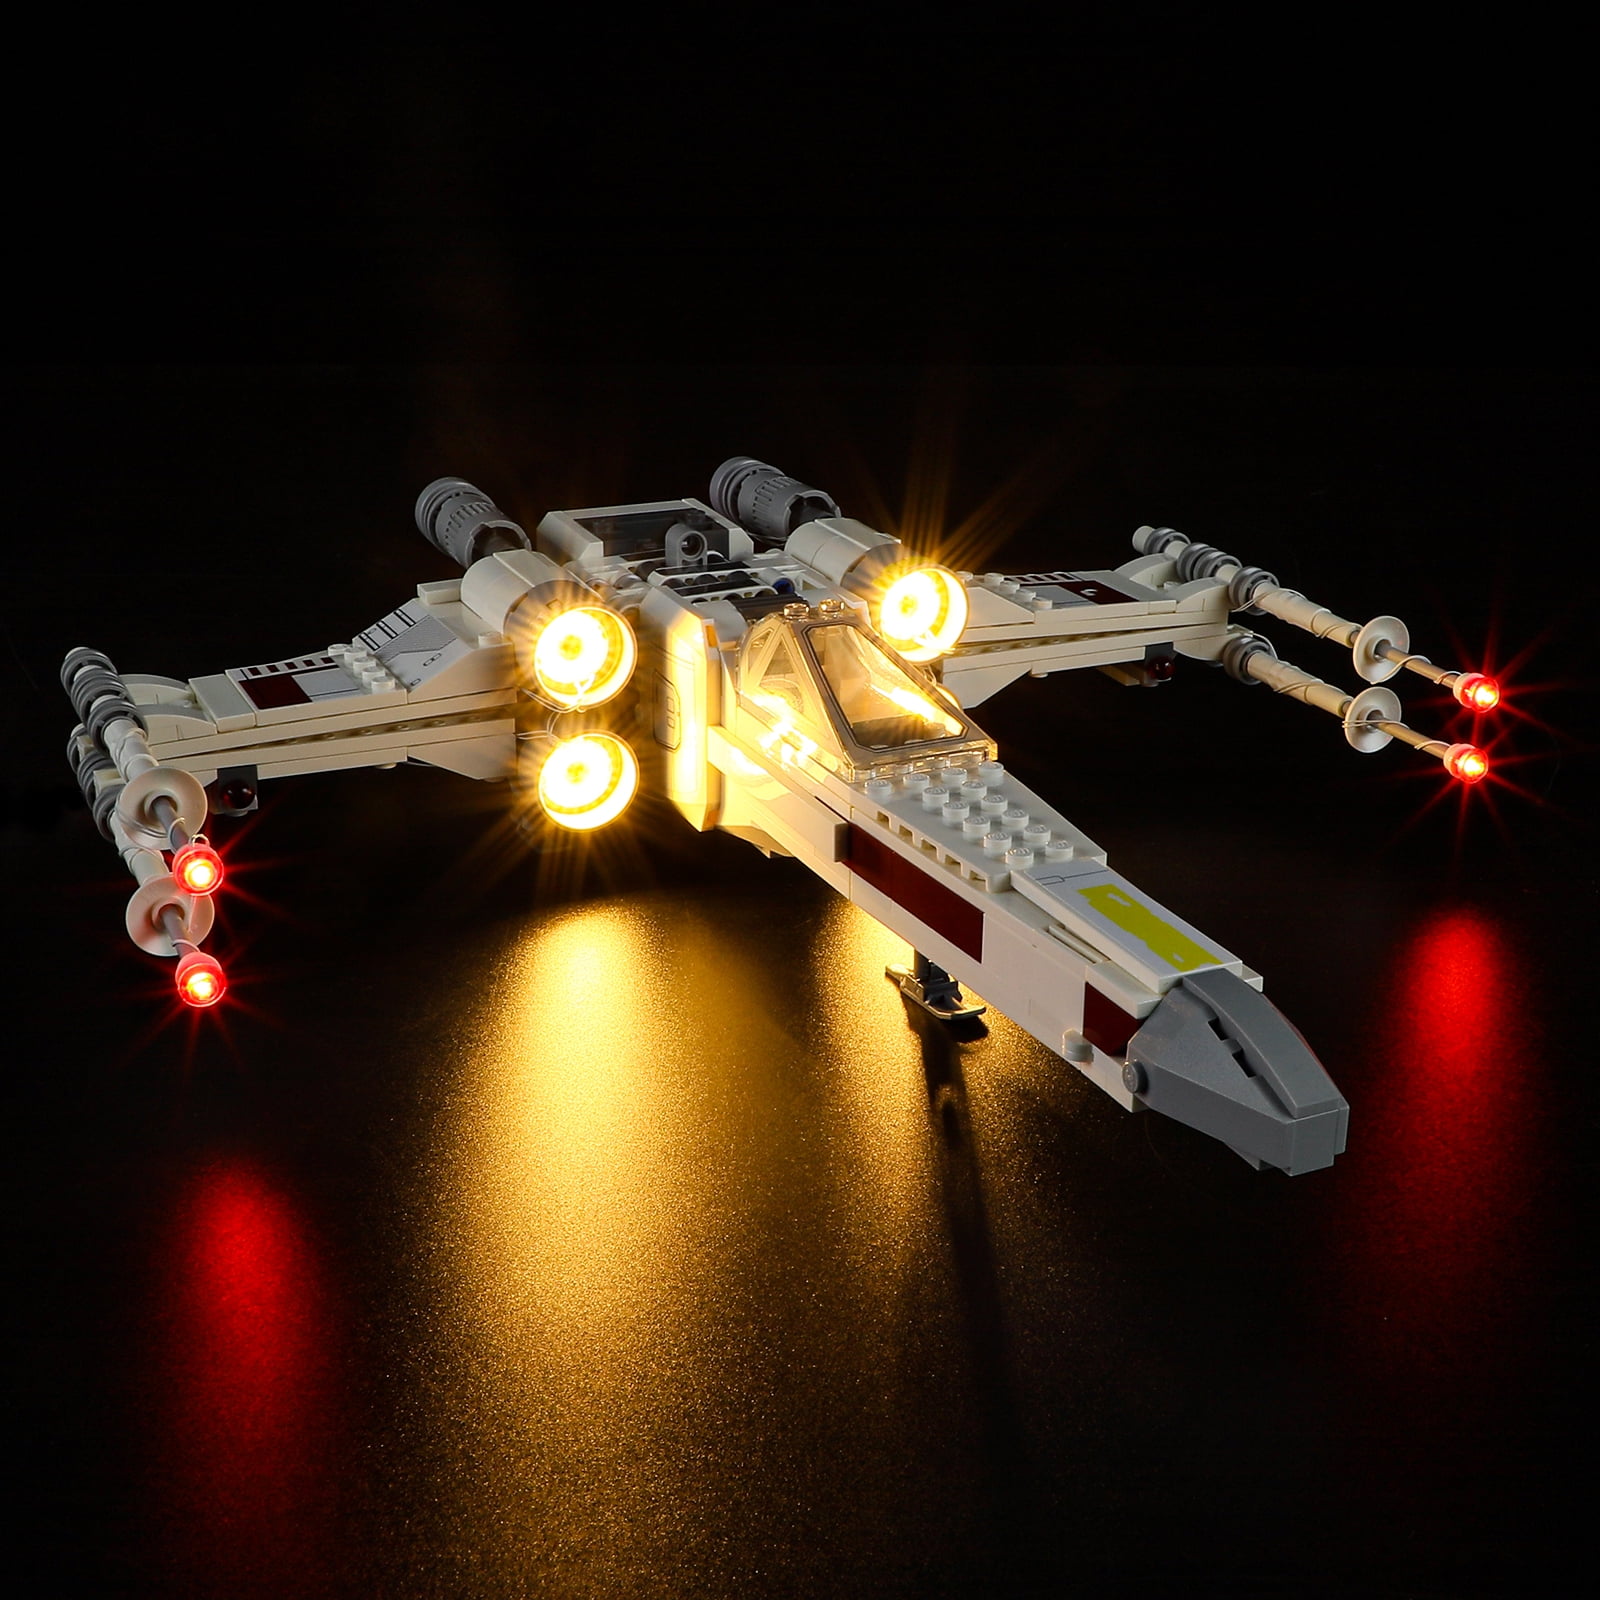 4D Build Millennium Falcon 3D Model Kit - 223 Piece Star Wars Desk Decor  and Building Toy for Adults & Teens 12+